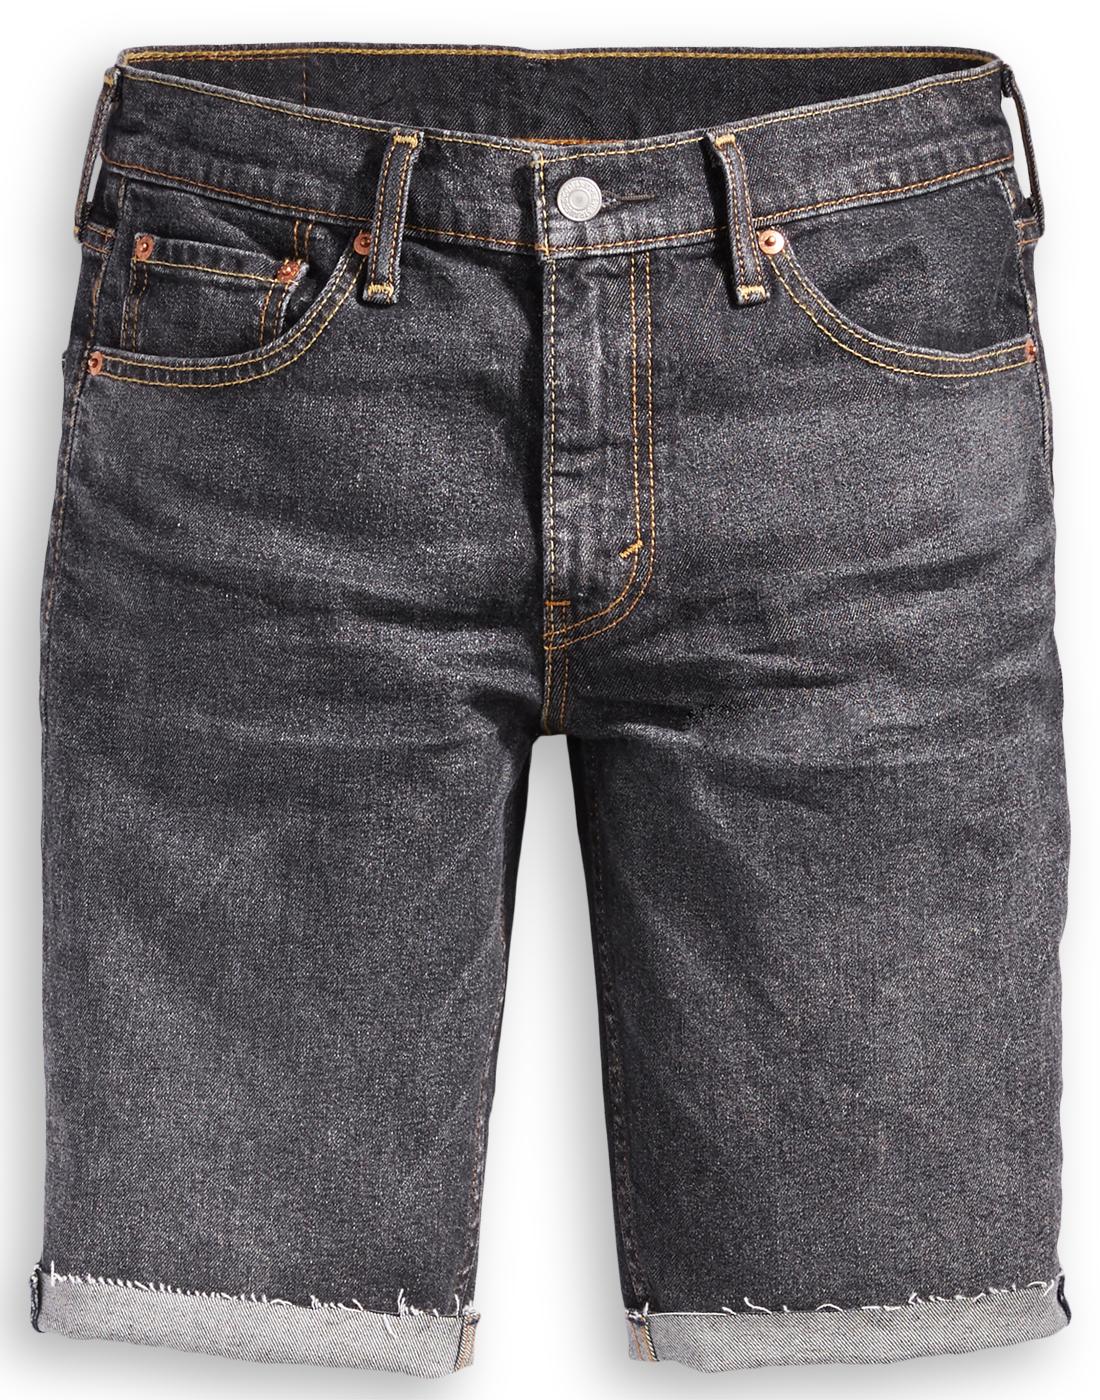 LEVI'S® 511 Men's Retro Slim Cut Off Denim Shorts in Bloke